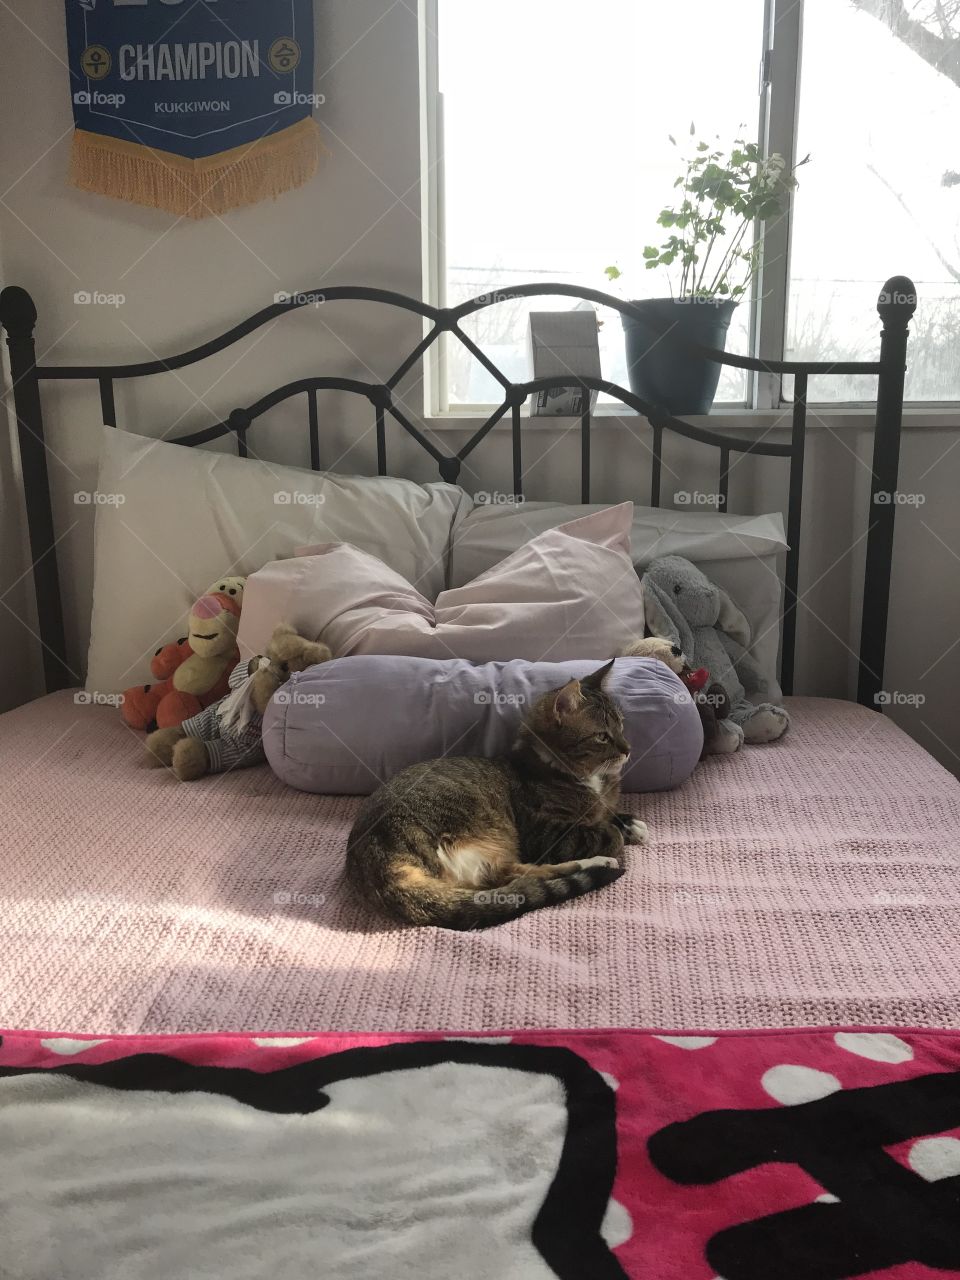 Freshly cleaned bedding is his favorite!